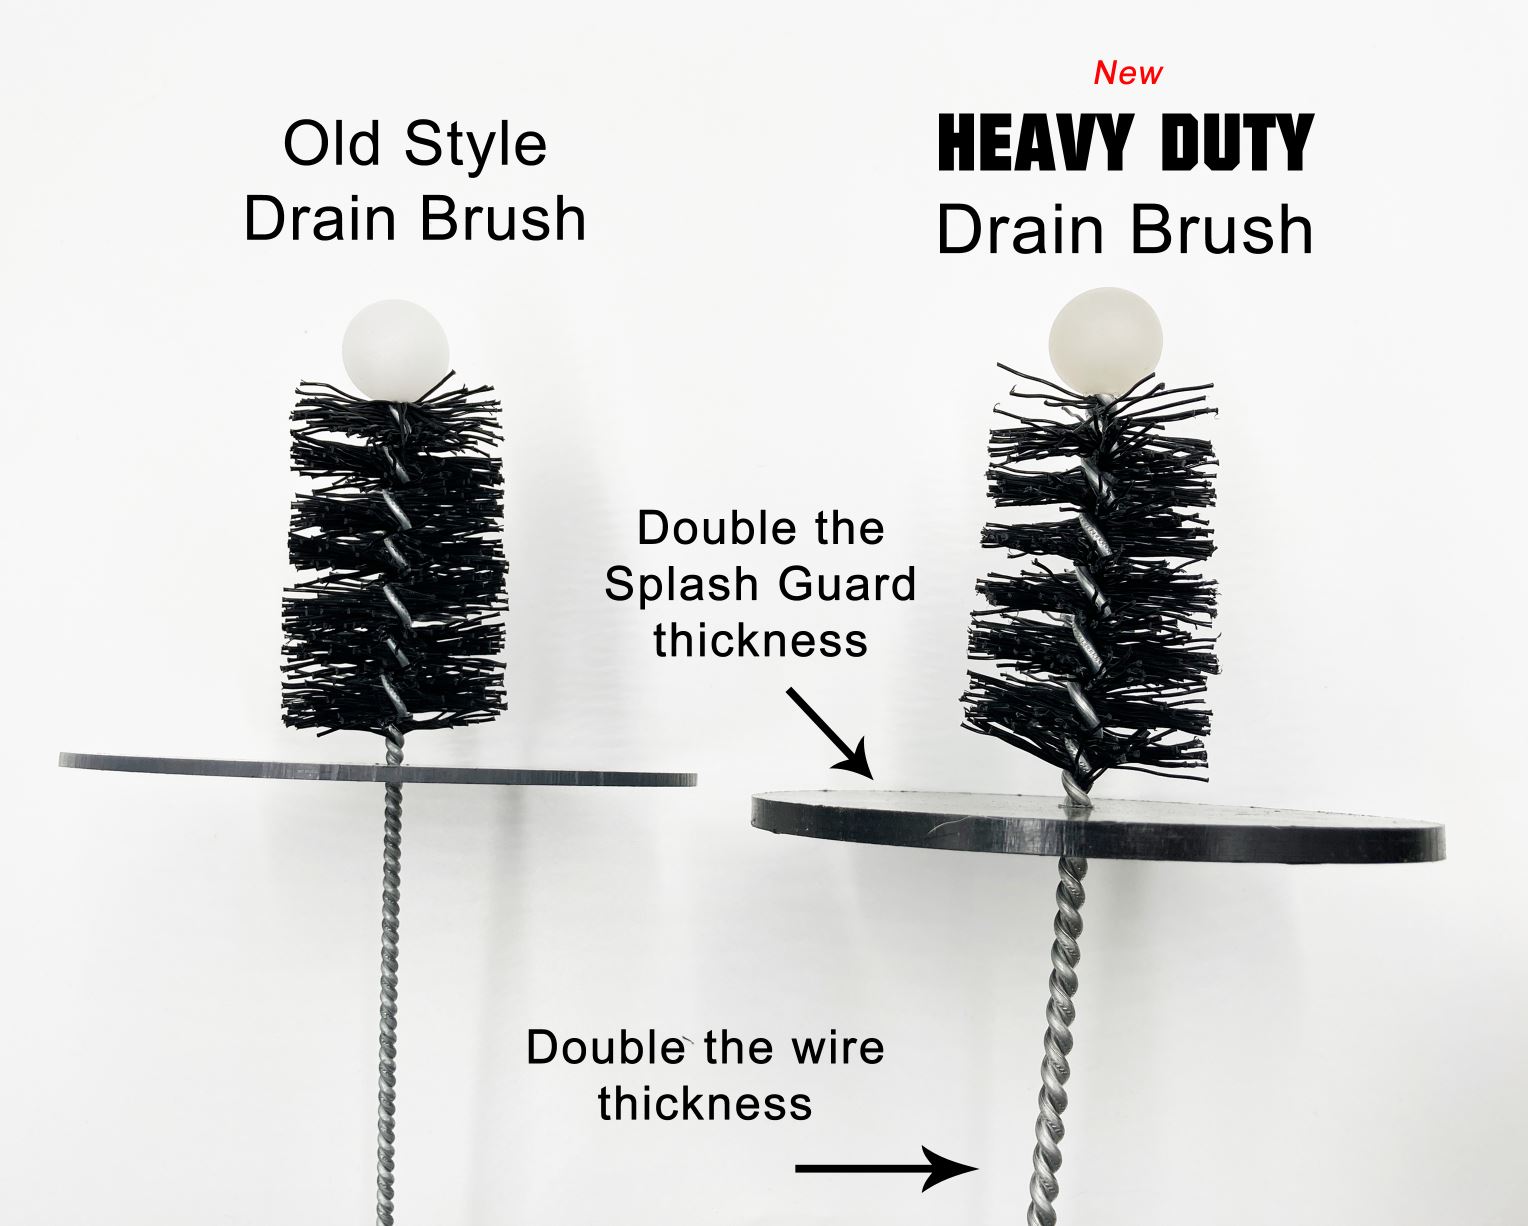 Kitchen Sink Brush - Drain-Net Technologies